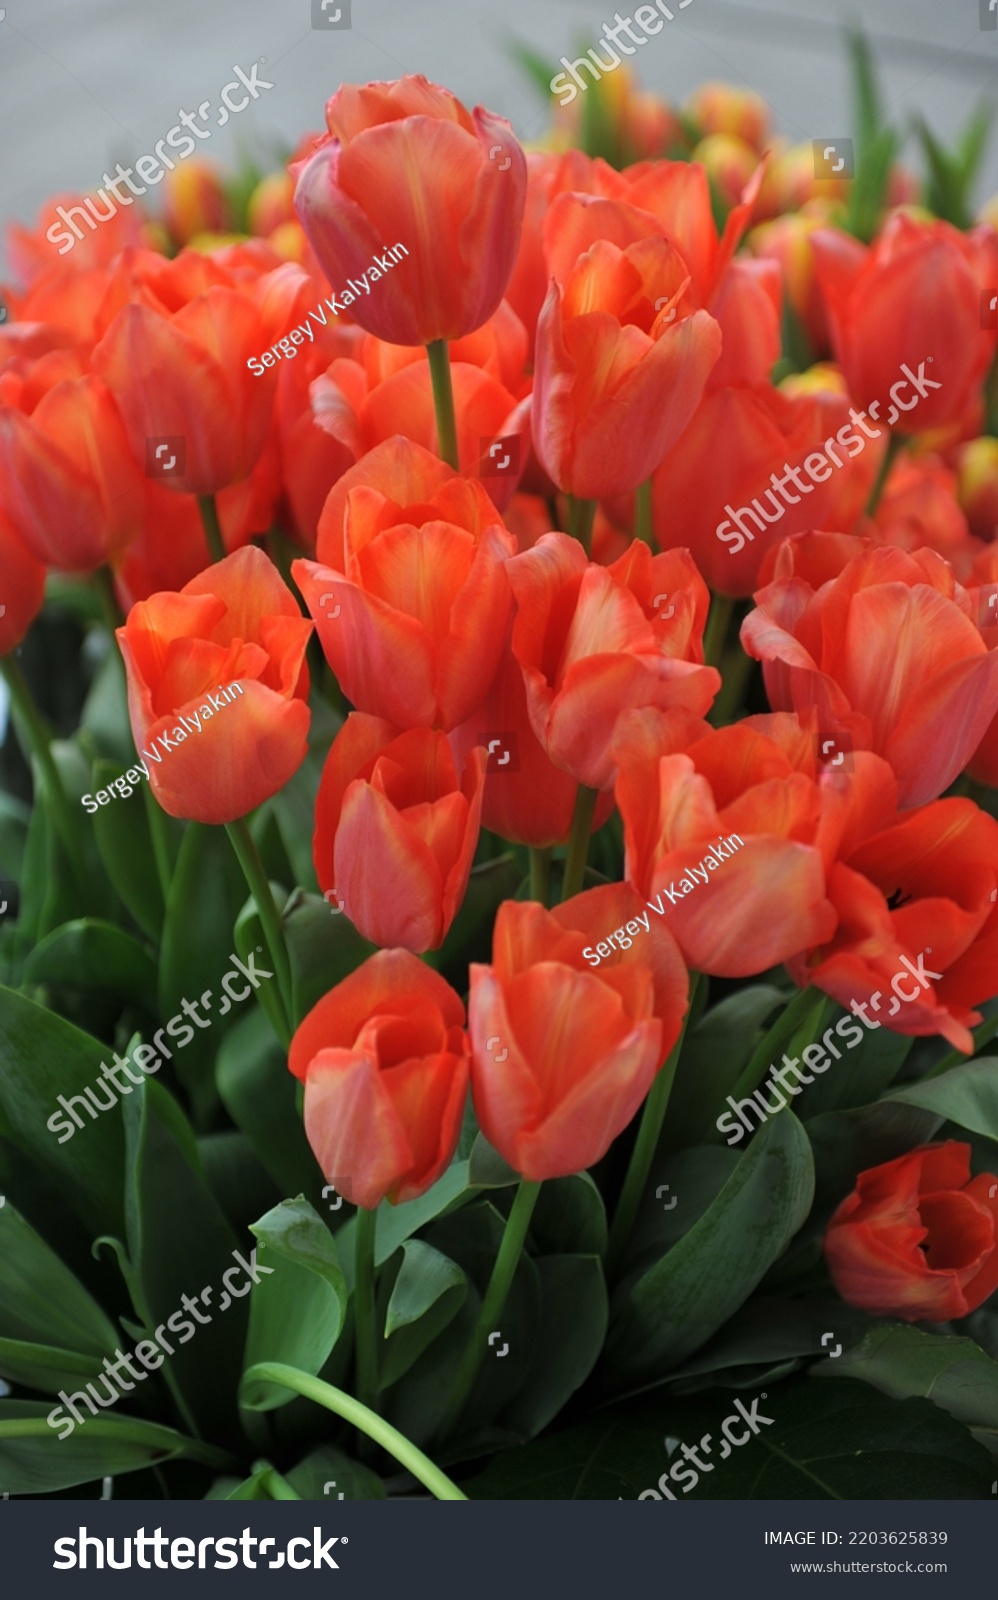 A bouquet of orange-red Triumph tulips (Tulipa) Rollecate in a garden in April #2203625839